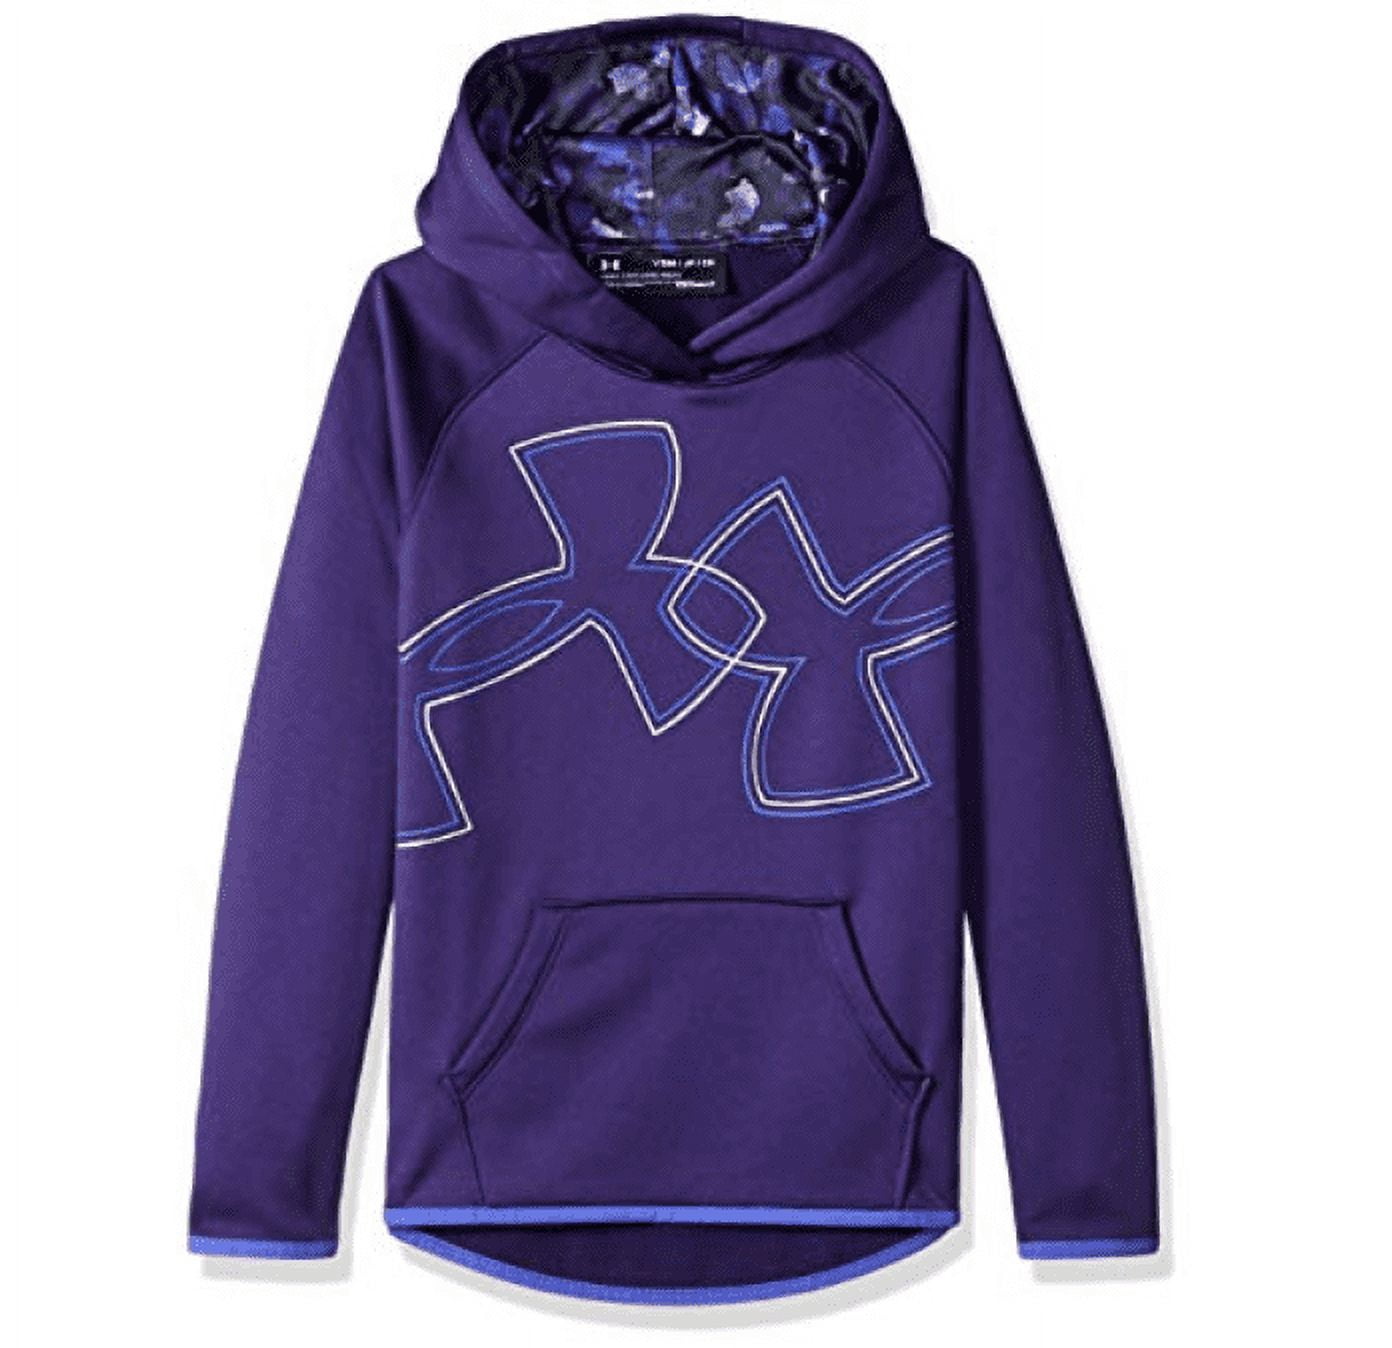 Under Armour Girls Fleece Dl Logo Hoodie, Cool Gear, Purple Youth